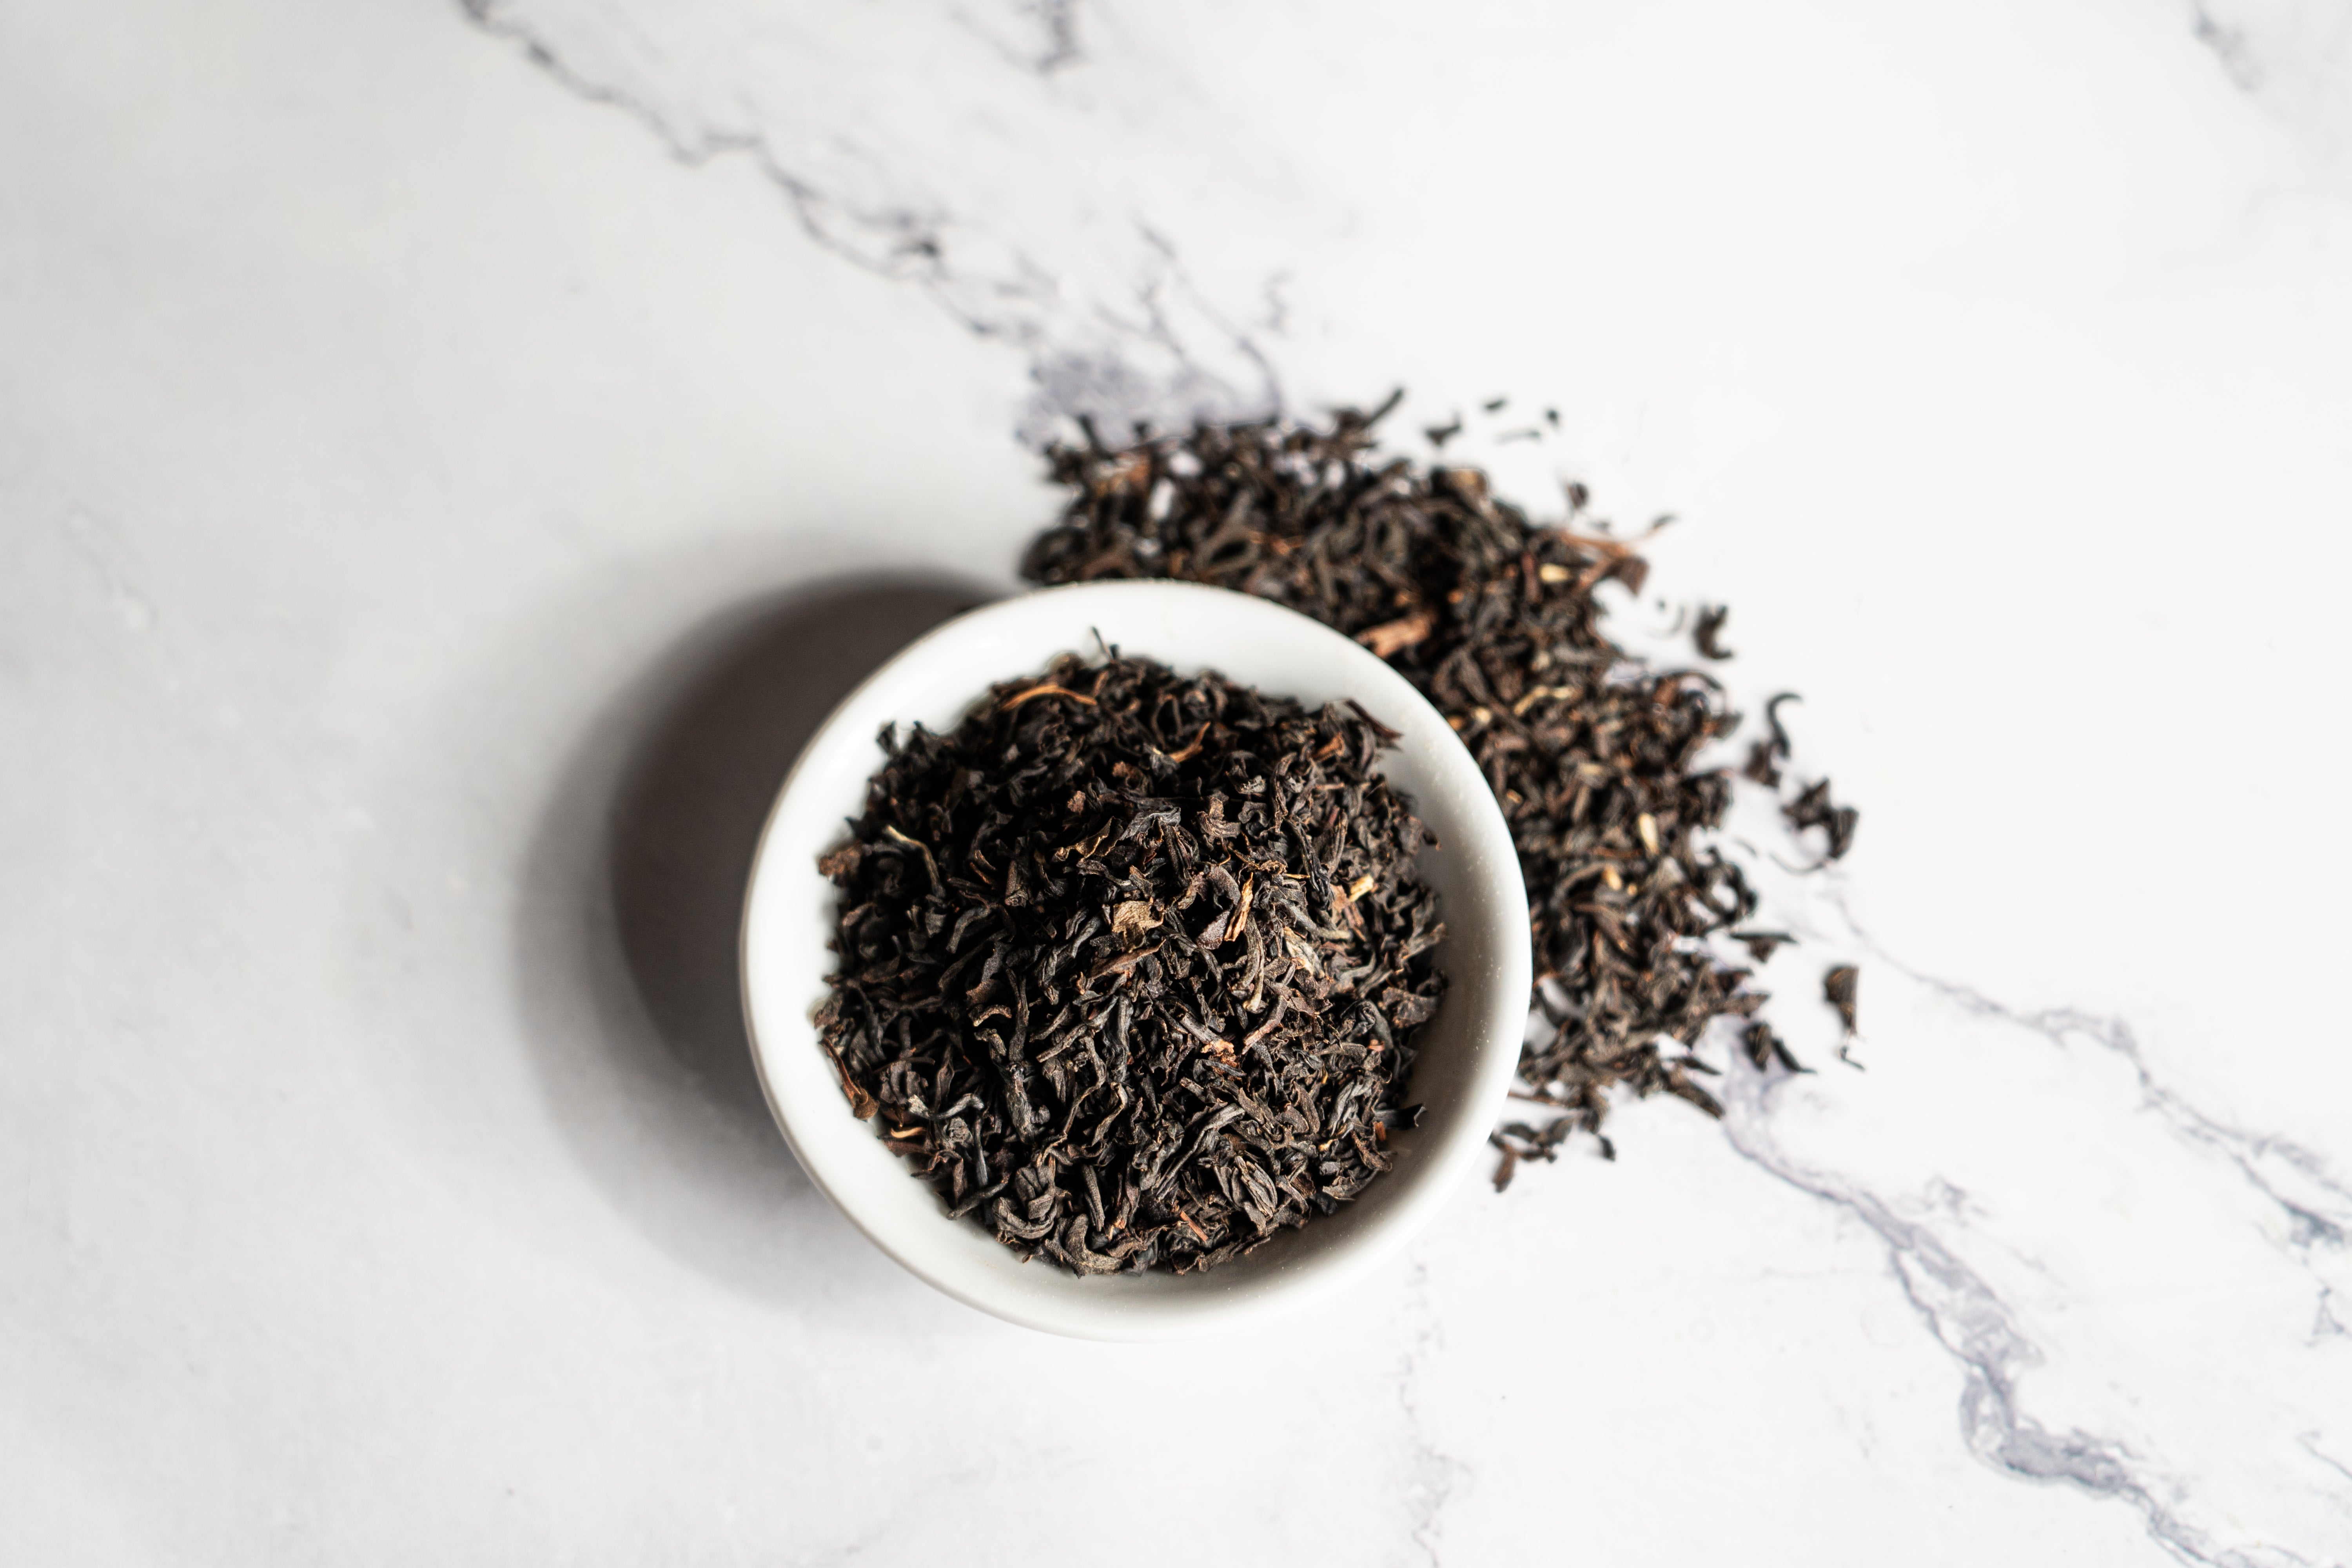 How Is Black Tea Made?